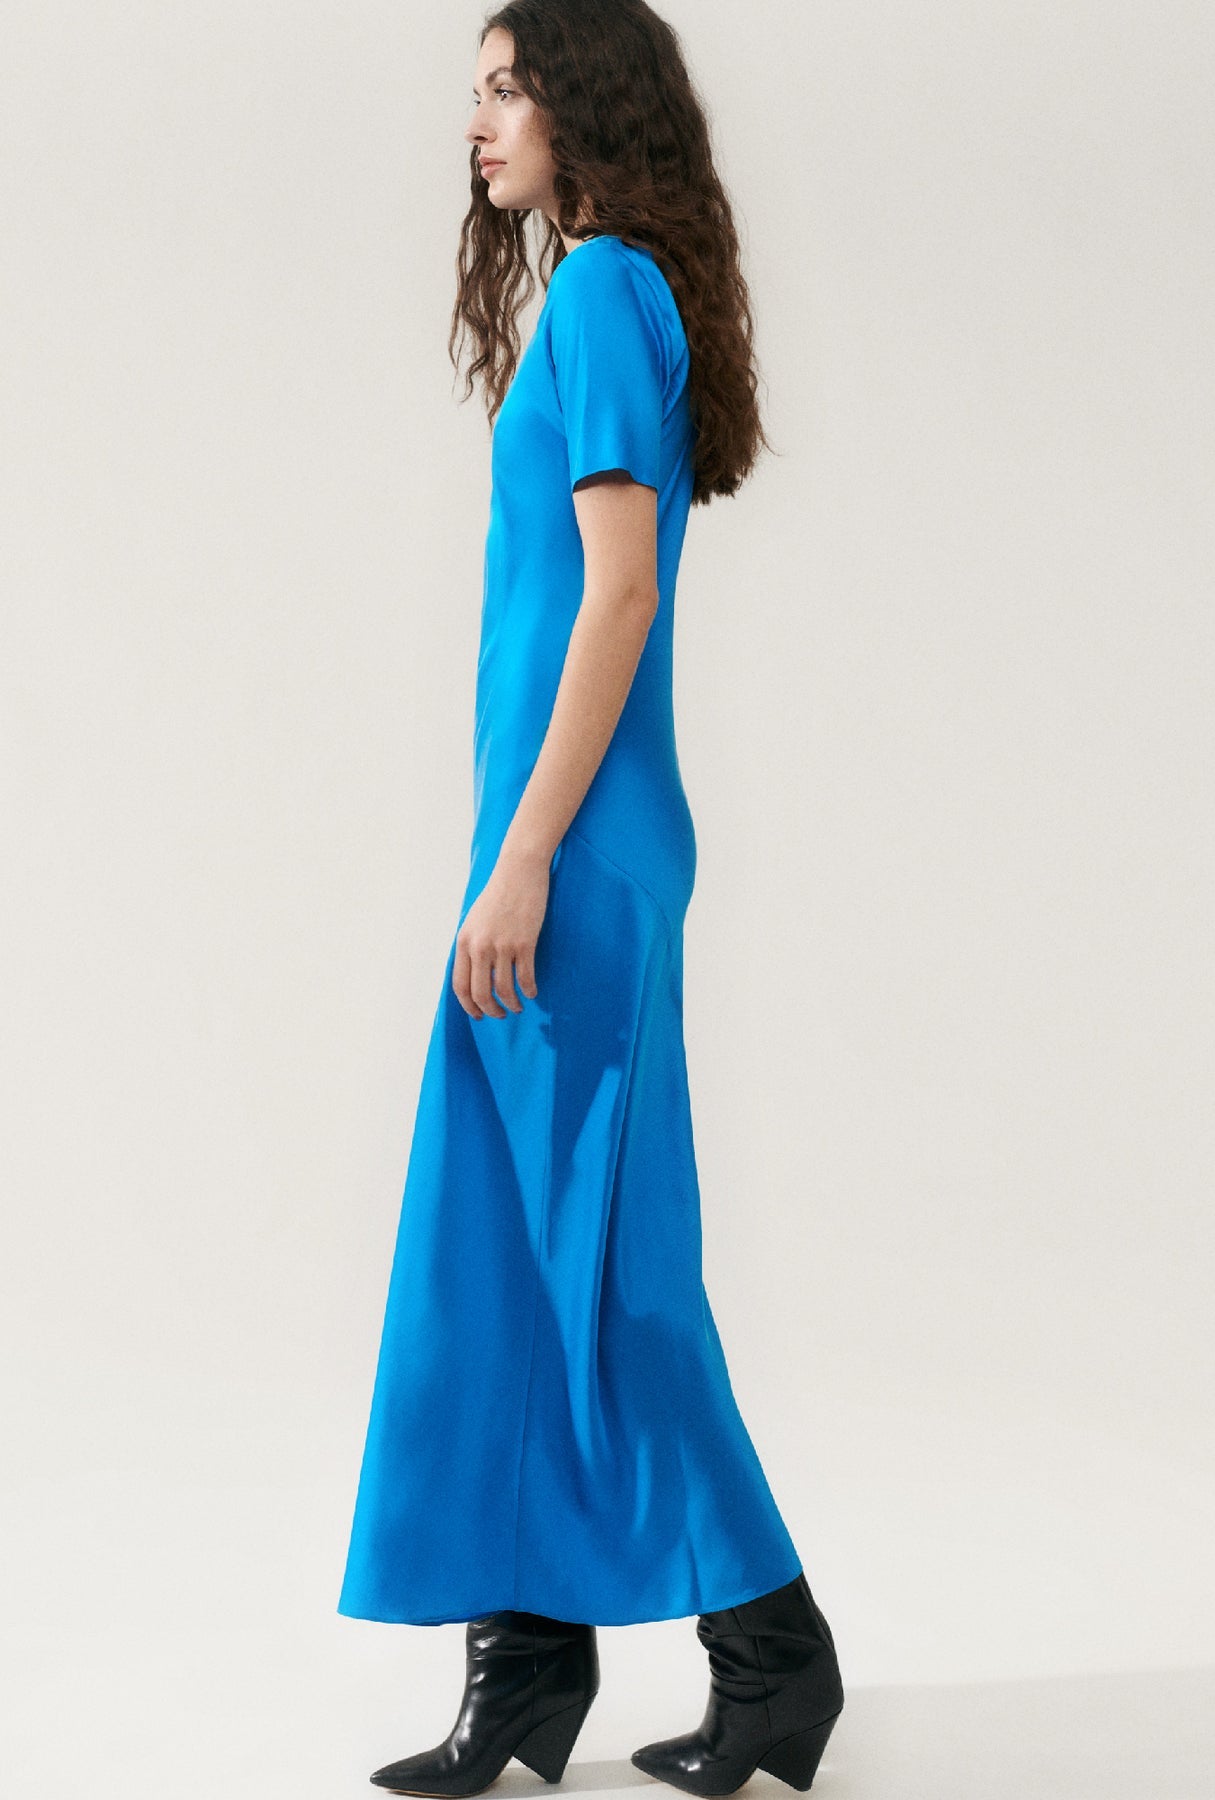 Short Sleeve Bias Dress - Coast Blue